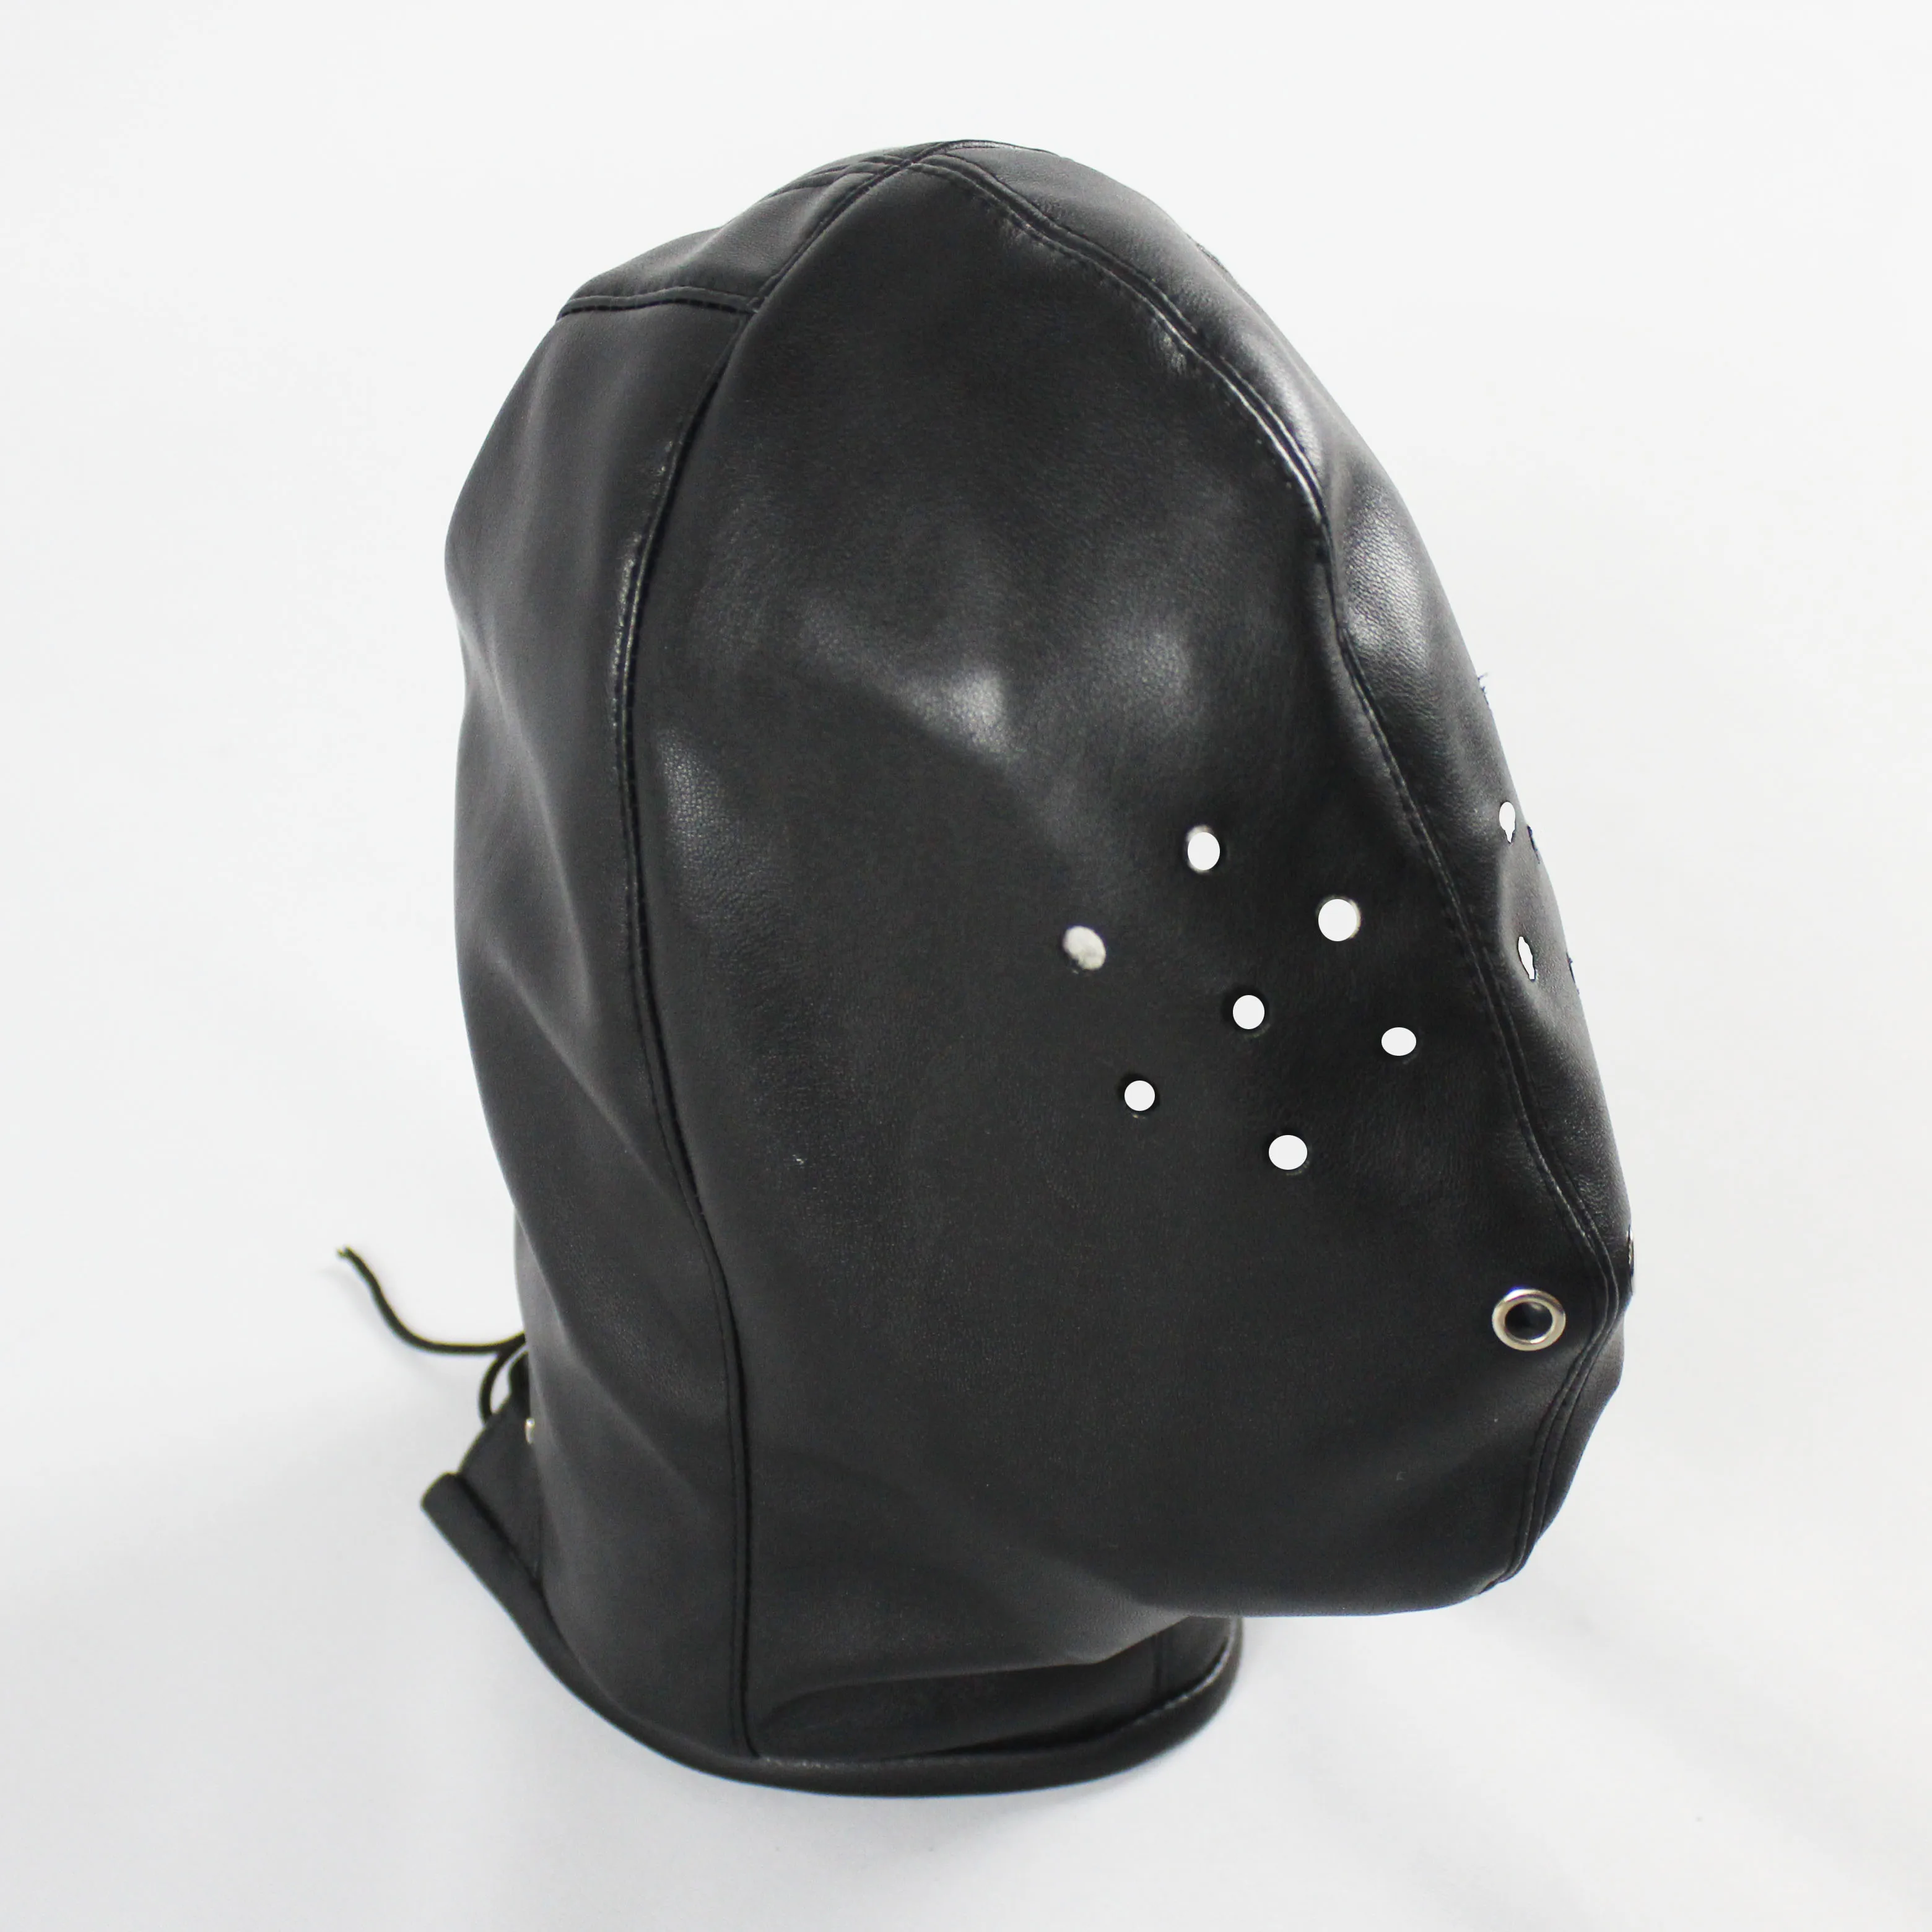 eye hole PU leather Head harness Cosplay Halloween hood mask headgear restraint 